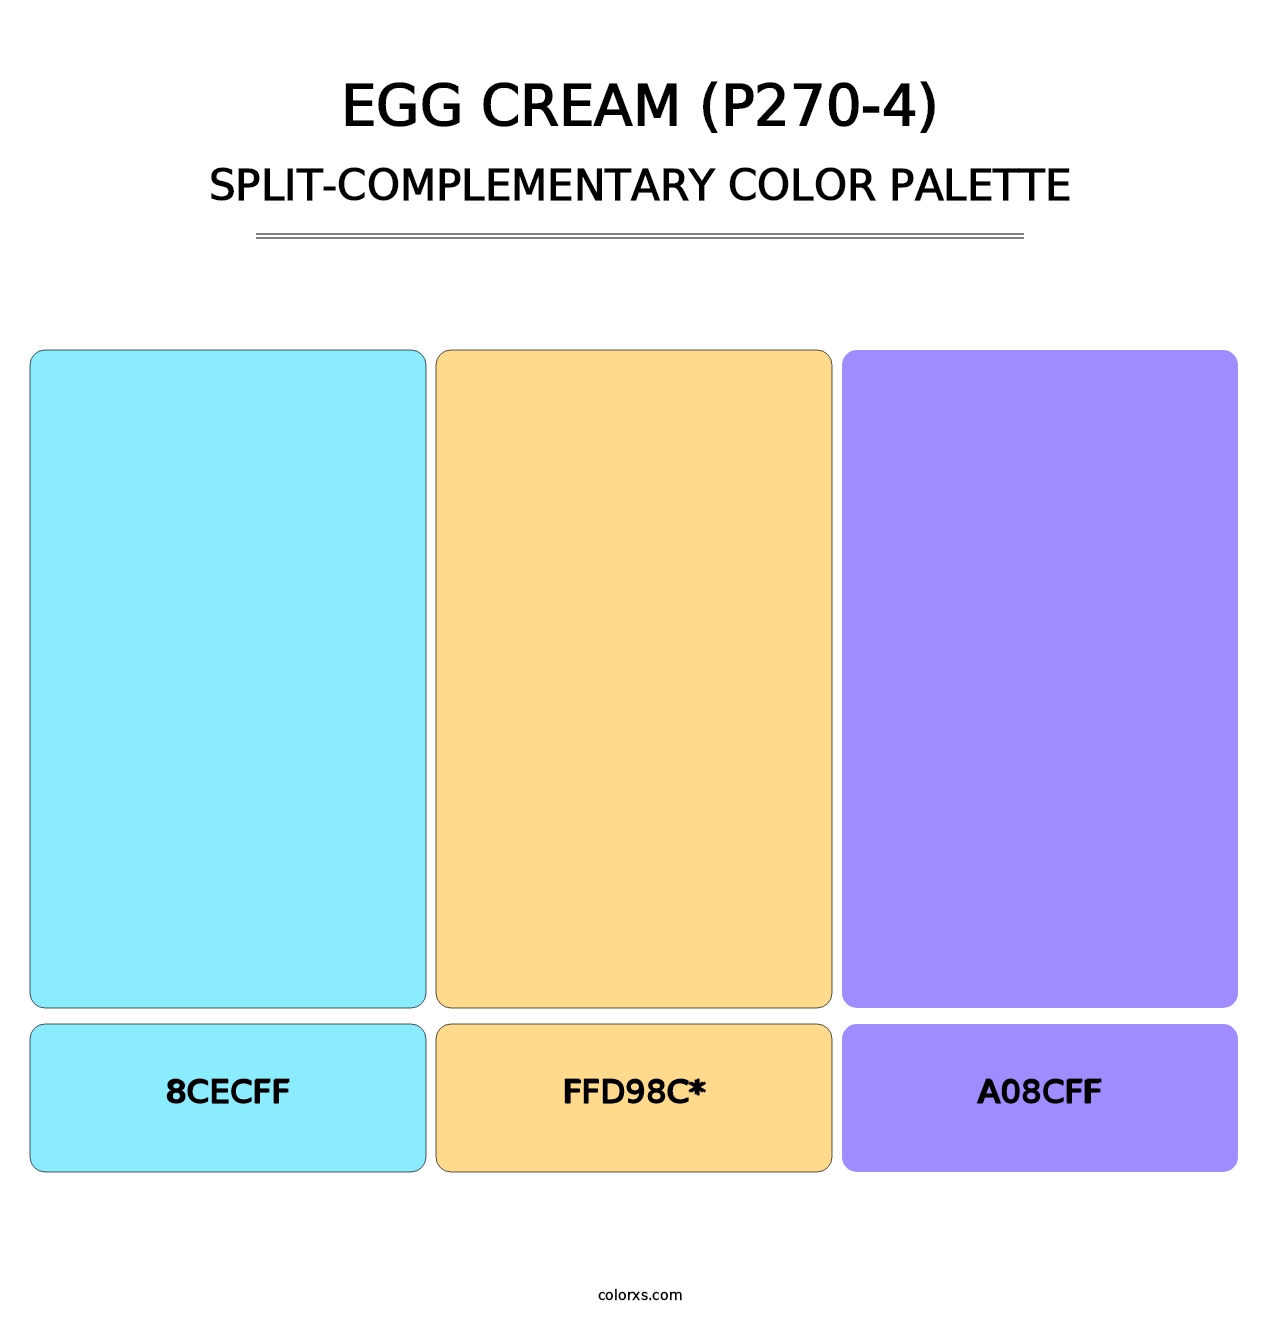 Egg Cream (P270-4) - Split-Complementary Color Palette